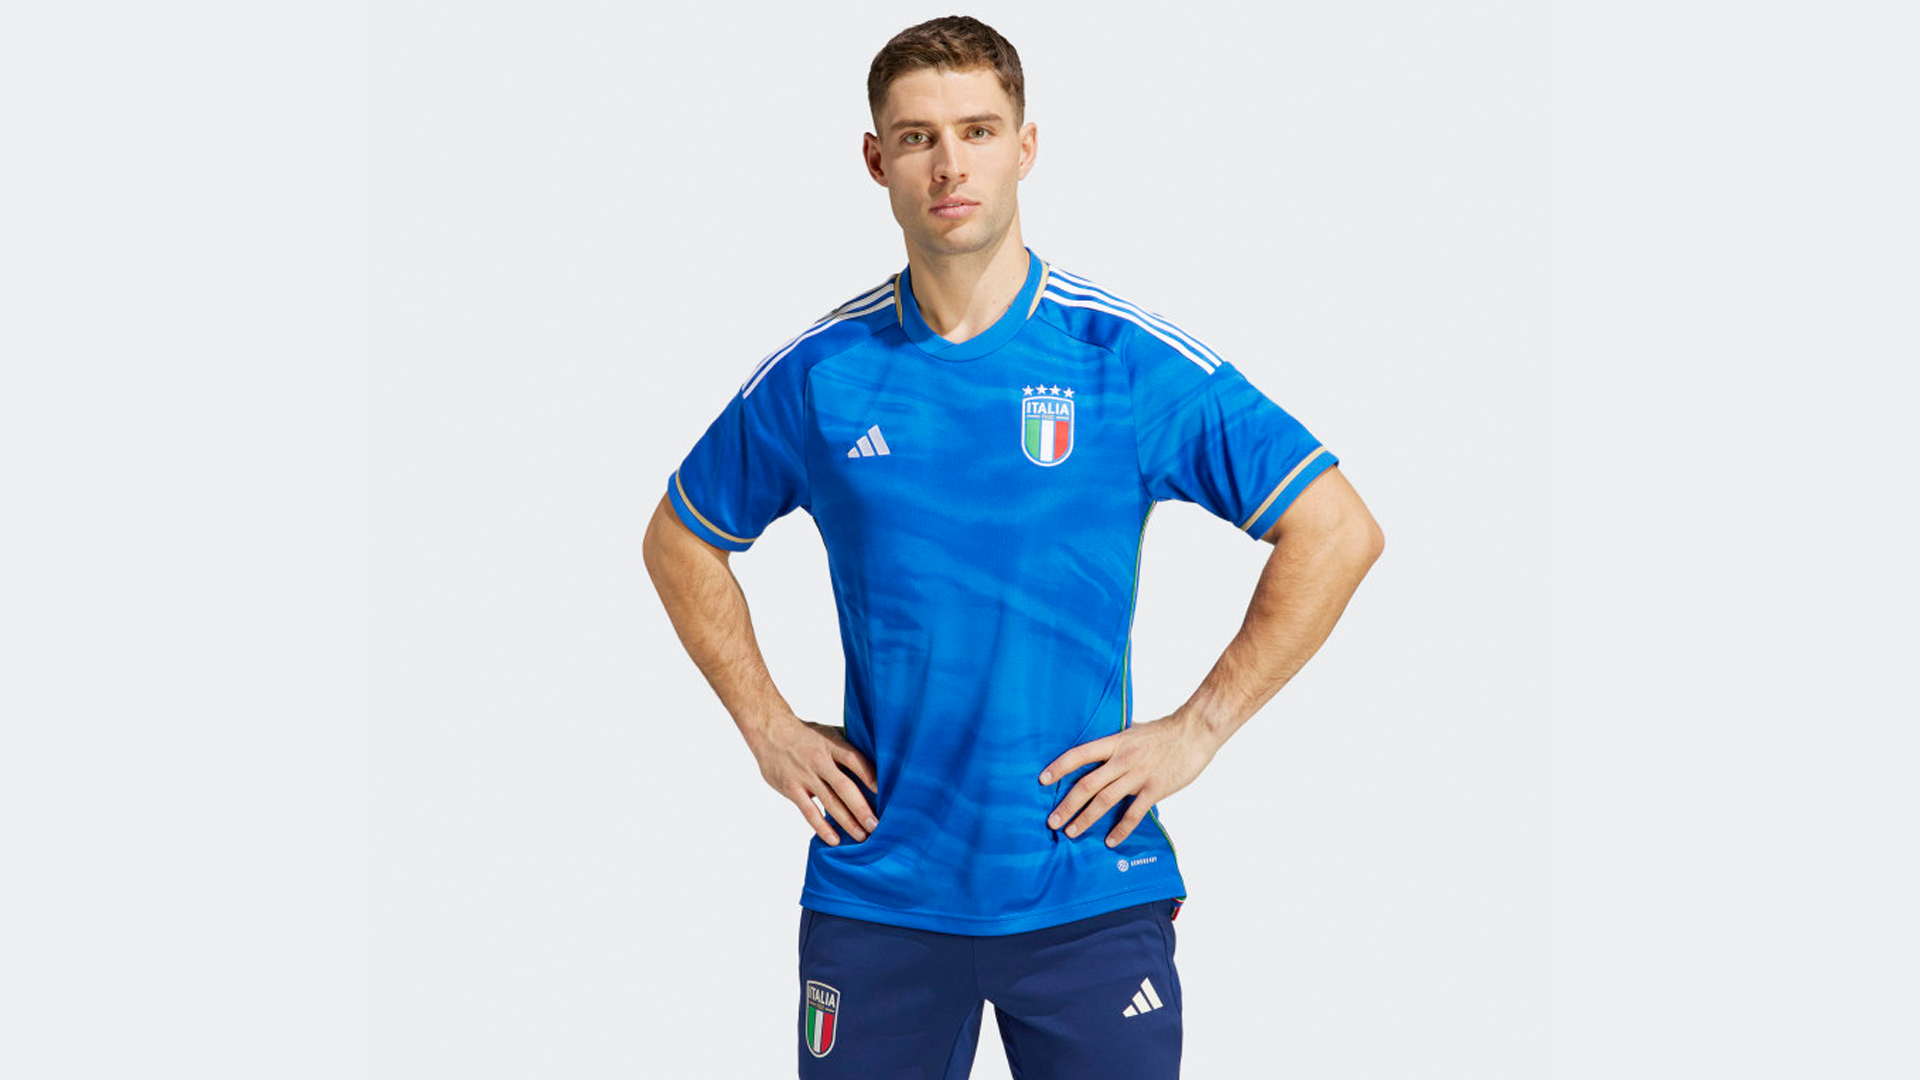 Italian football culture's shirts